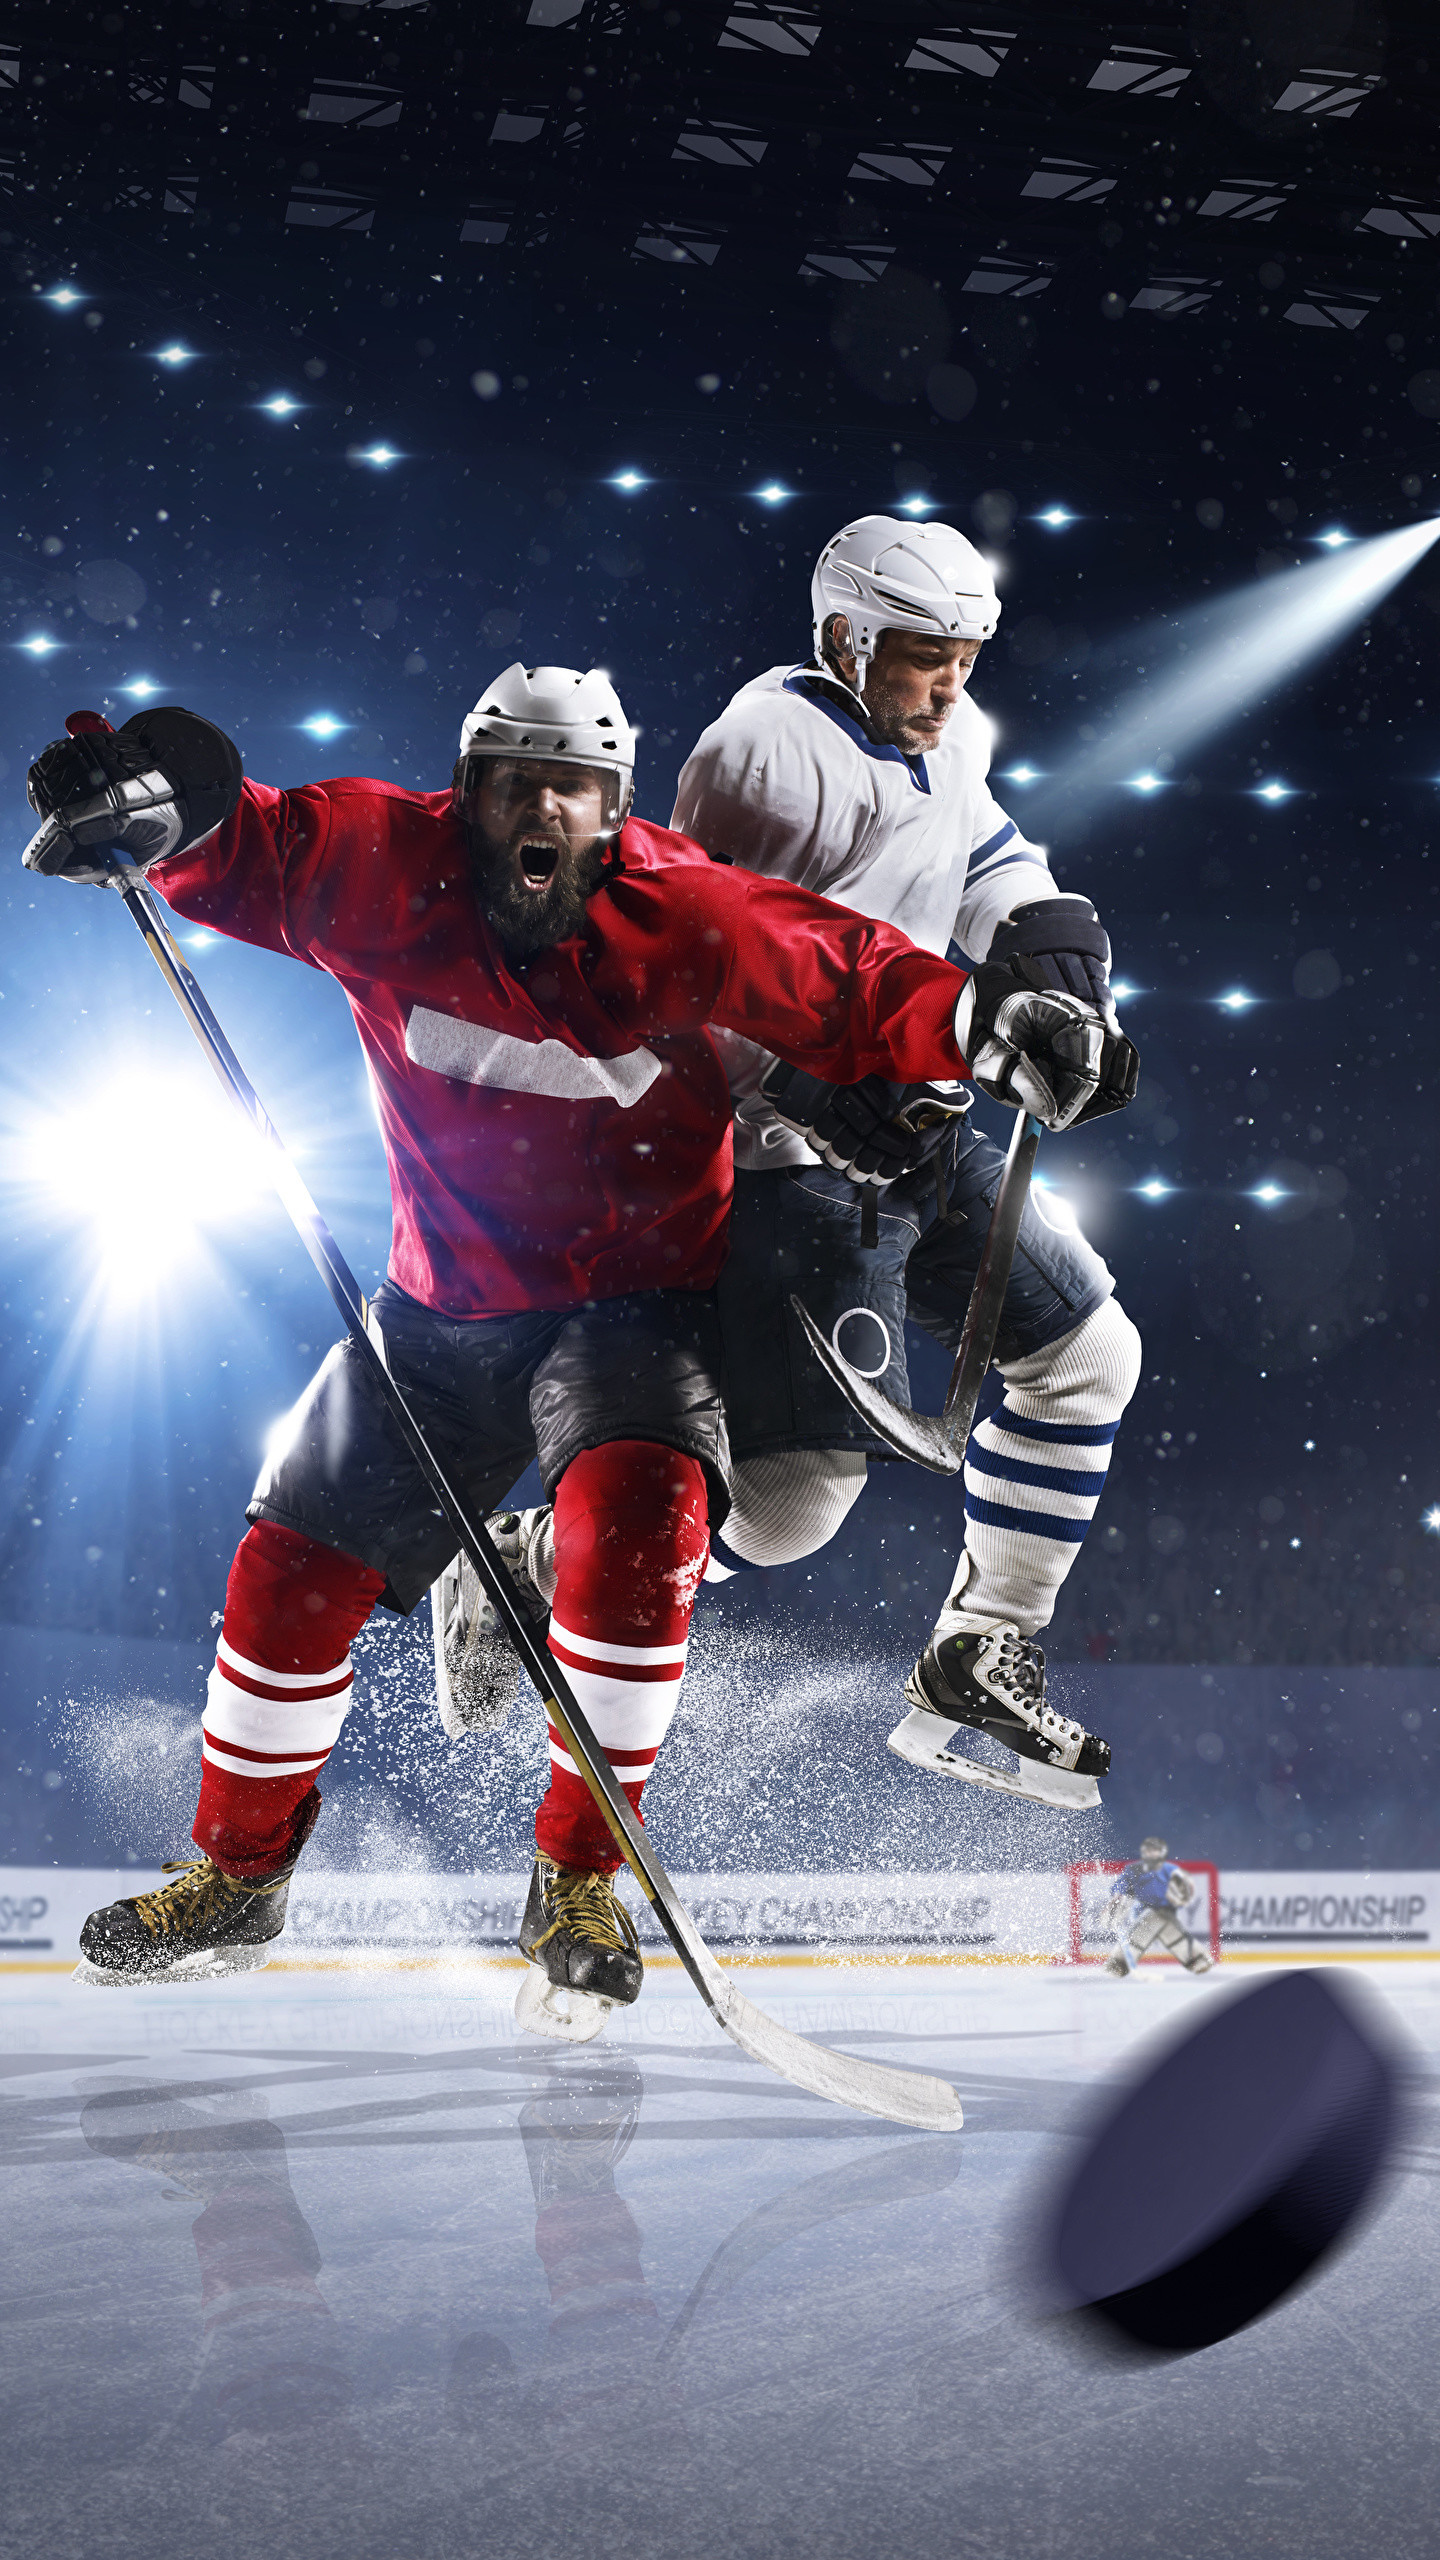 fond d'écran de hockey,équipement de hockey sur glace,hockey sur glace,le hockey,jeux de bâton et de balle,équipement de sport